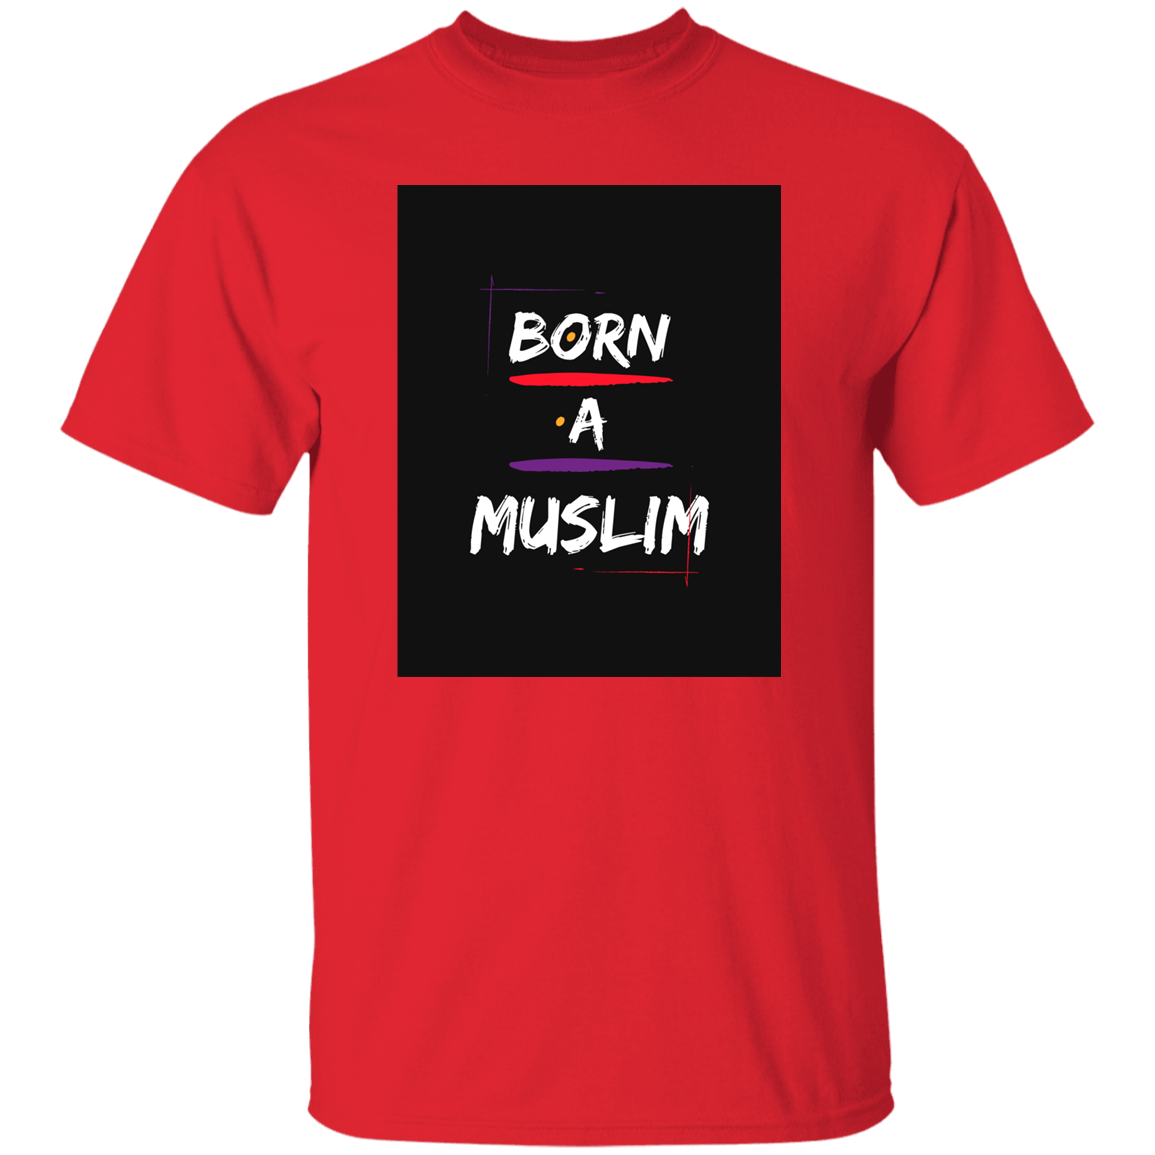 BORN A MUSLIM  T-Shirt (MORE COLOR OPTIONS)